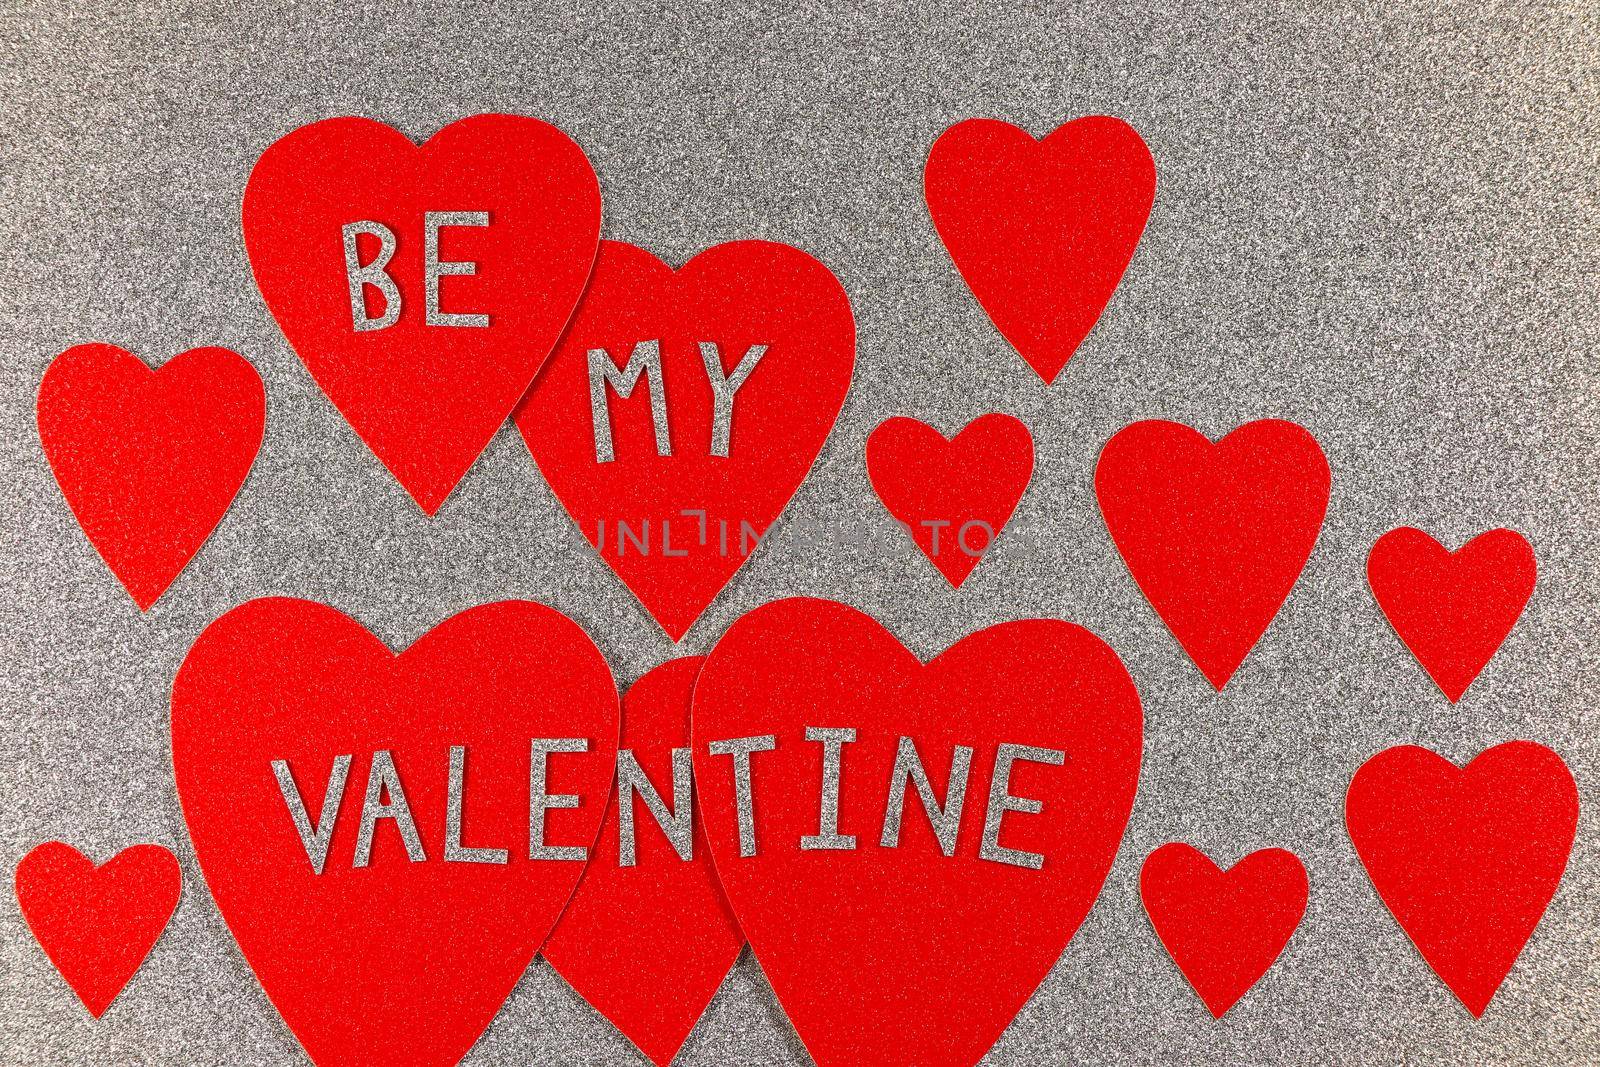 Be My Valentine Red Hearts On Silver Background by jjvanginkel